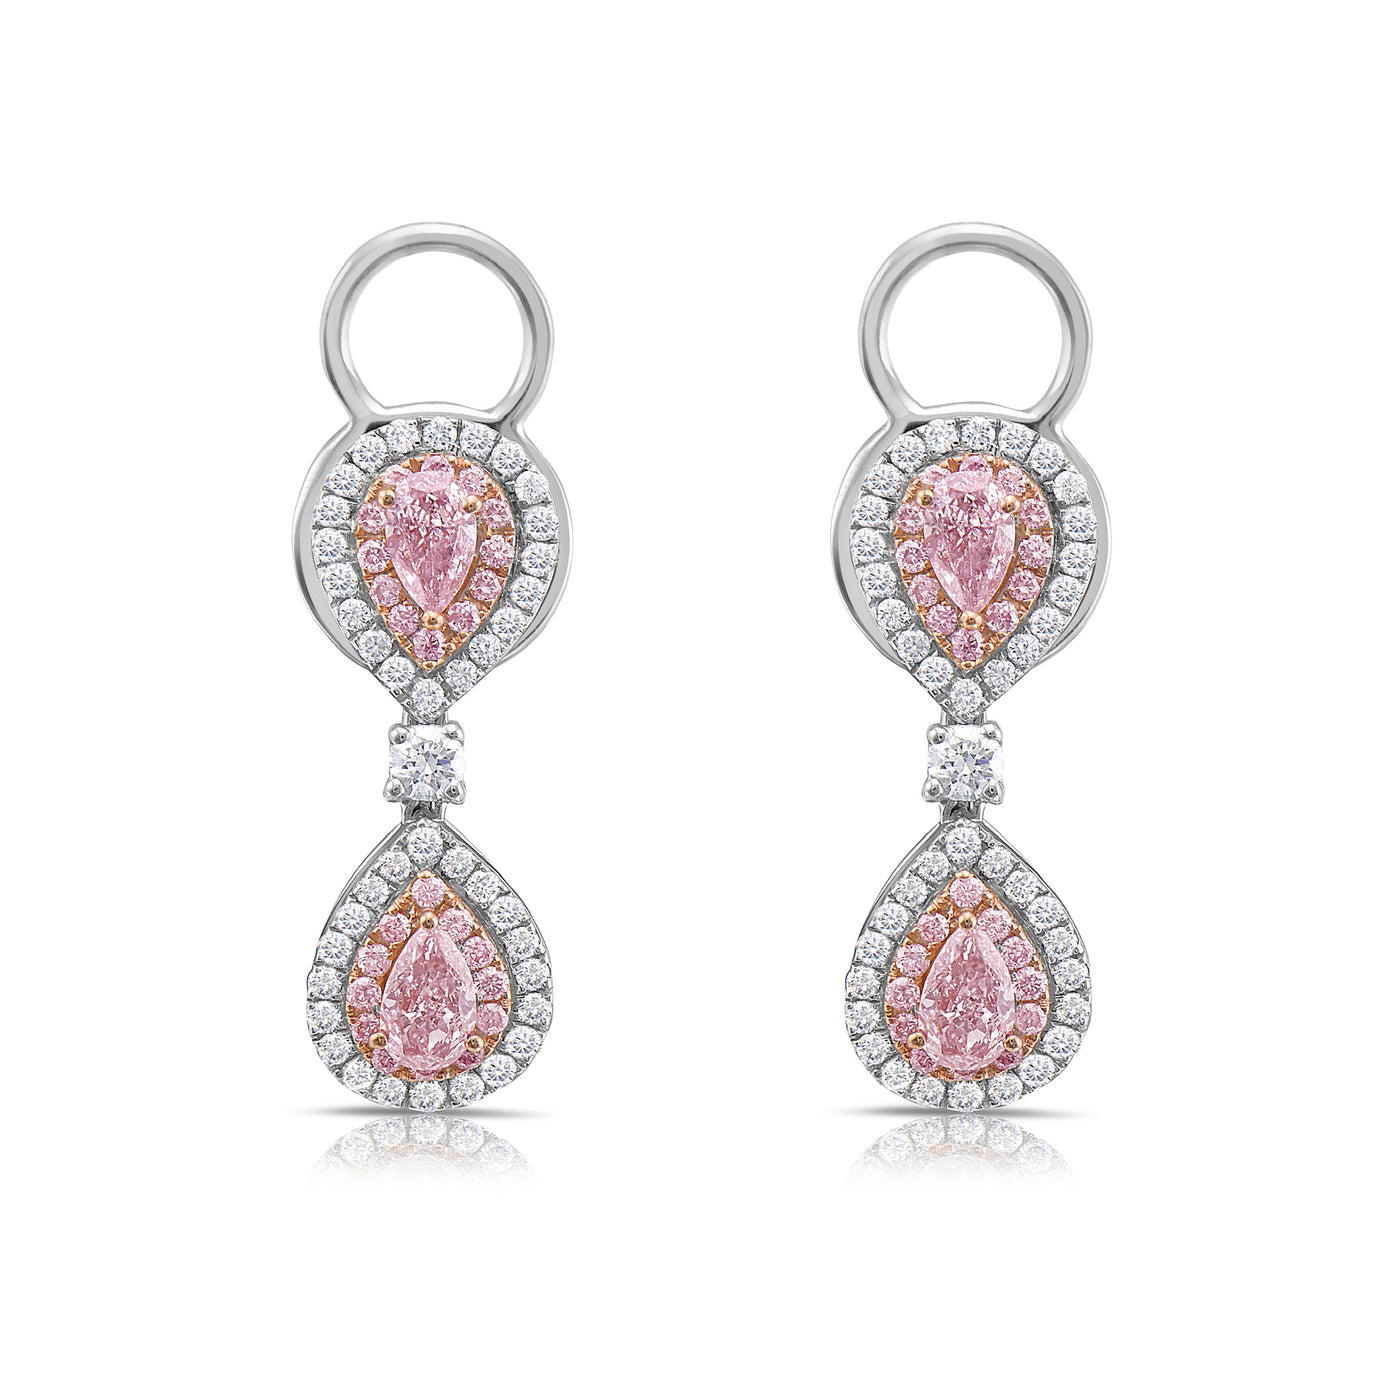 1.33 Carat Pink Pear Diamond Earrings